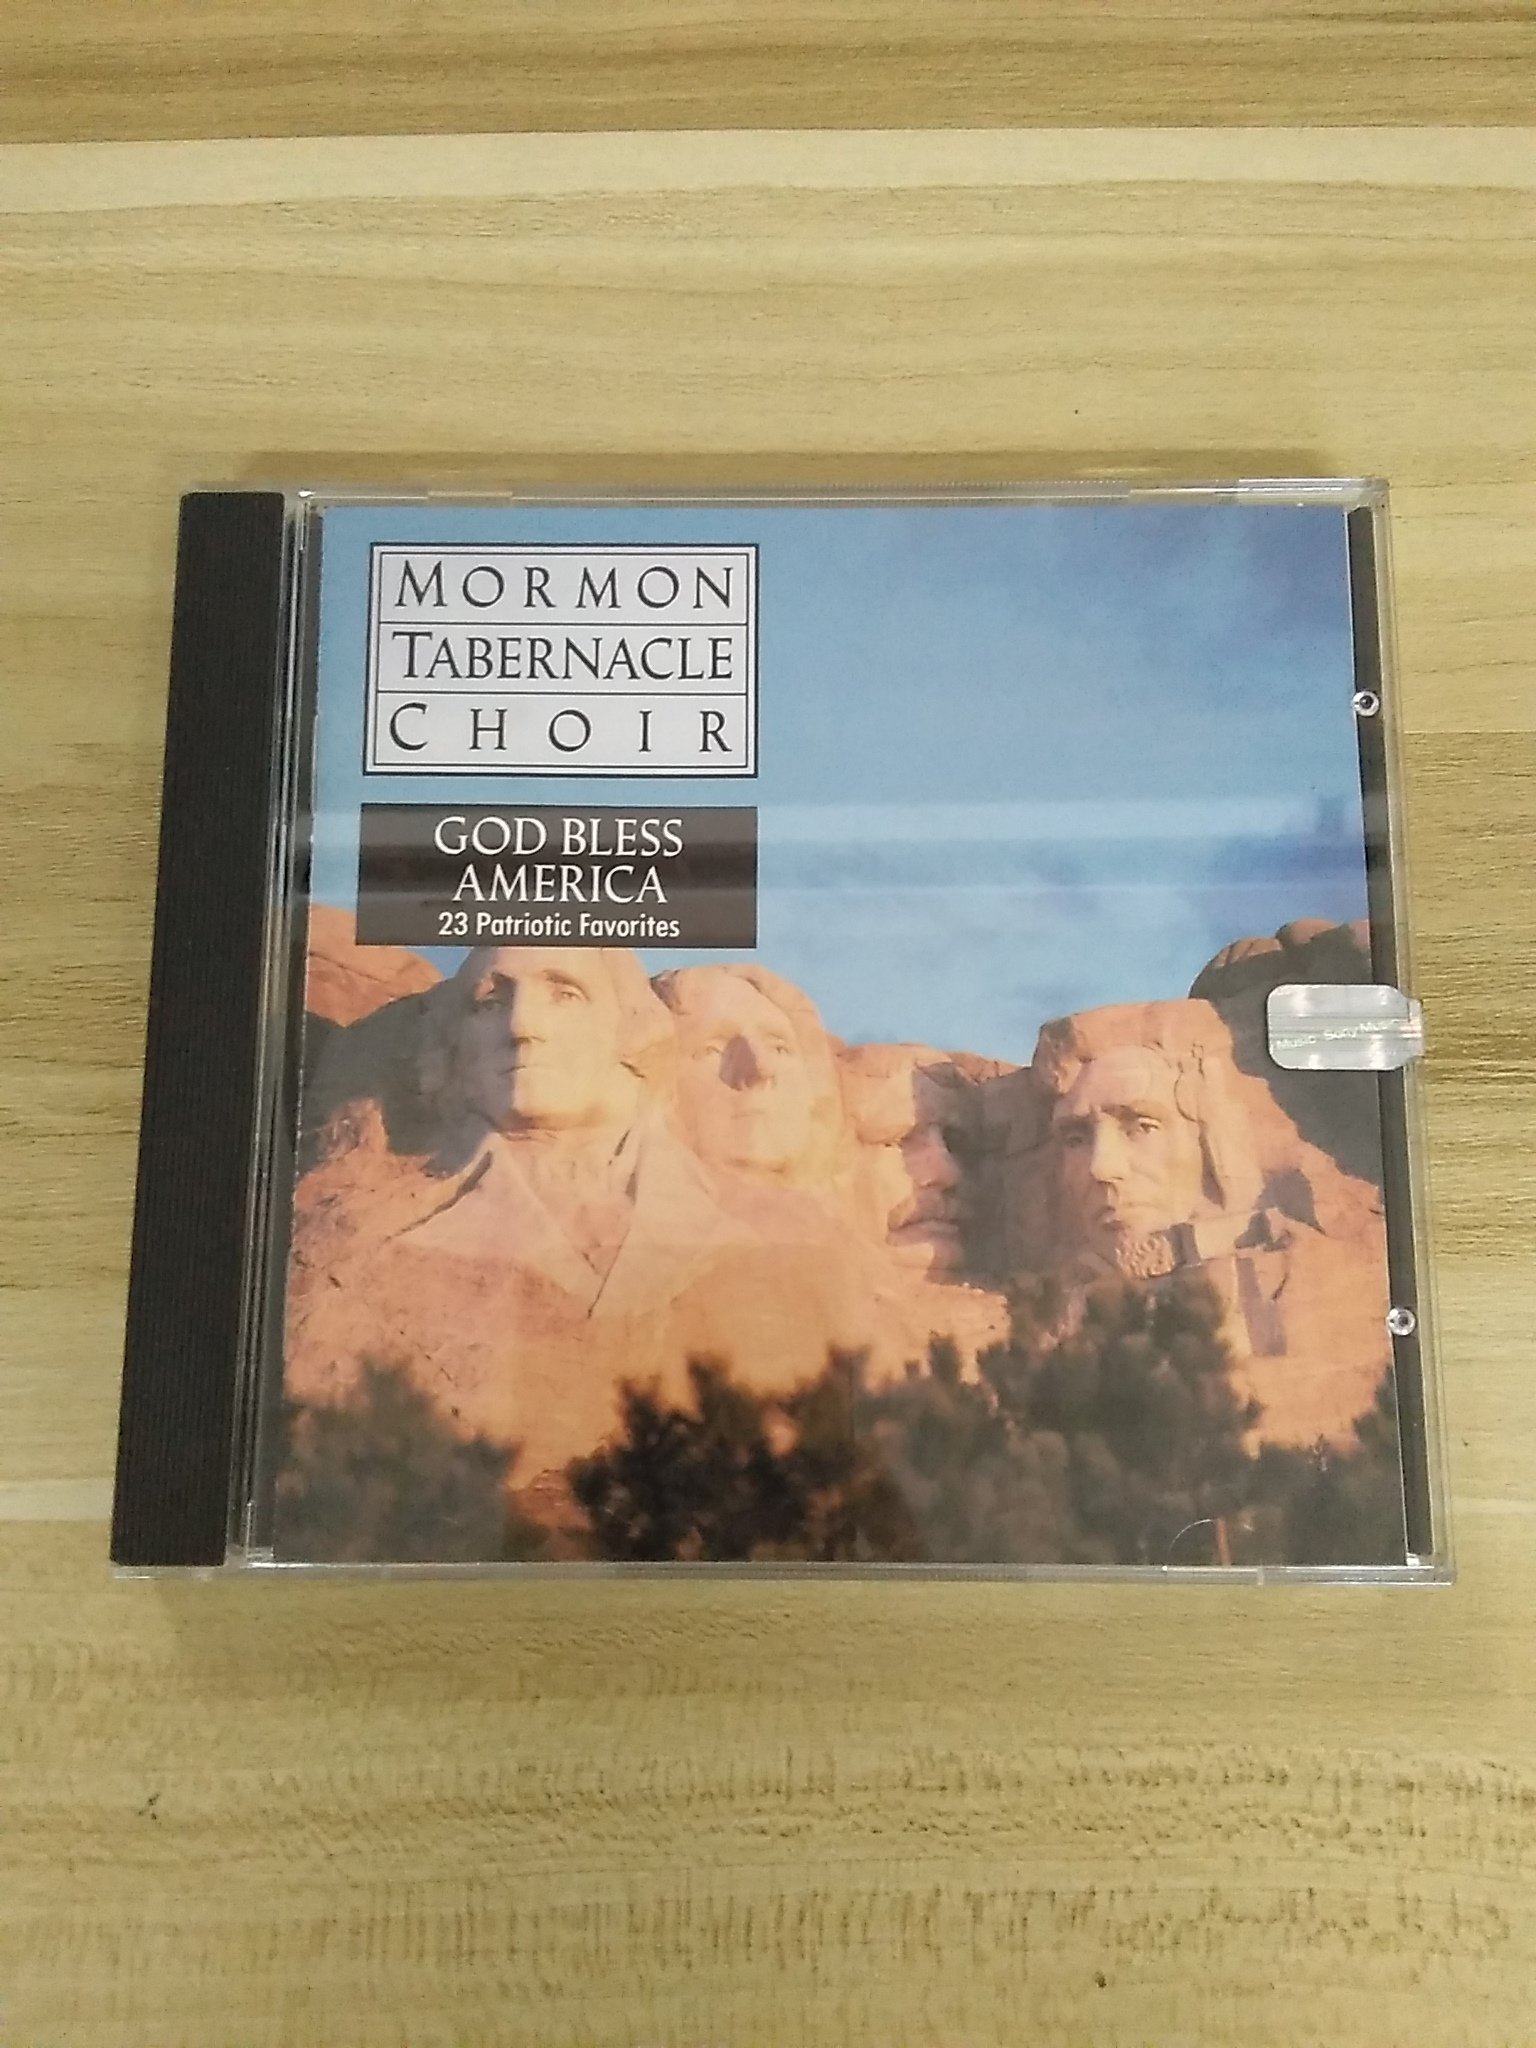 二手CD/MormonTabernacle Choir God Bless America#西洋#360免運#CD396